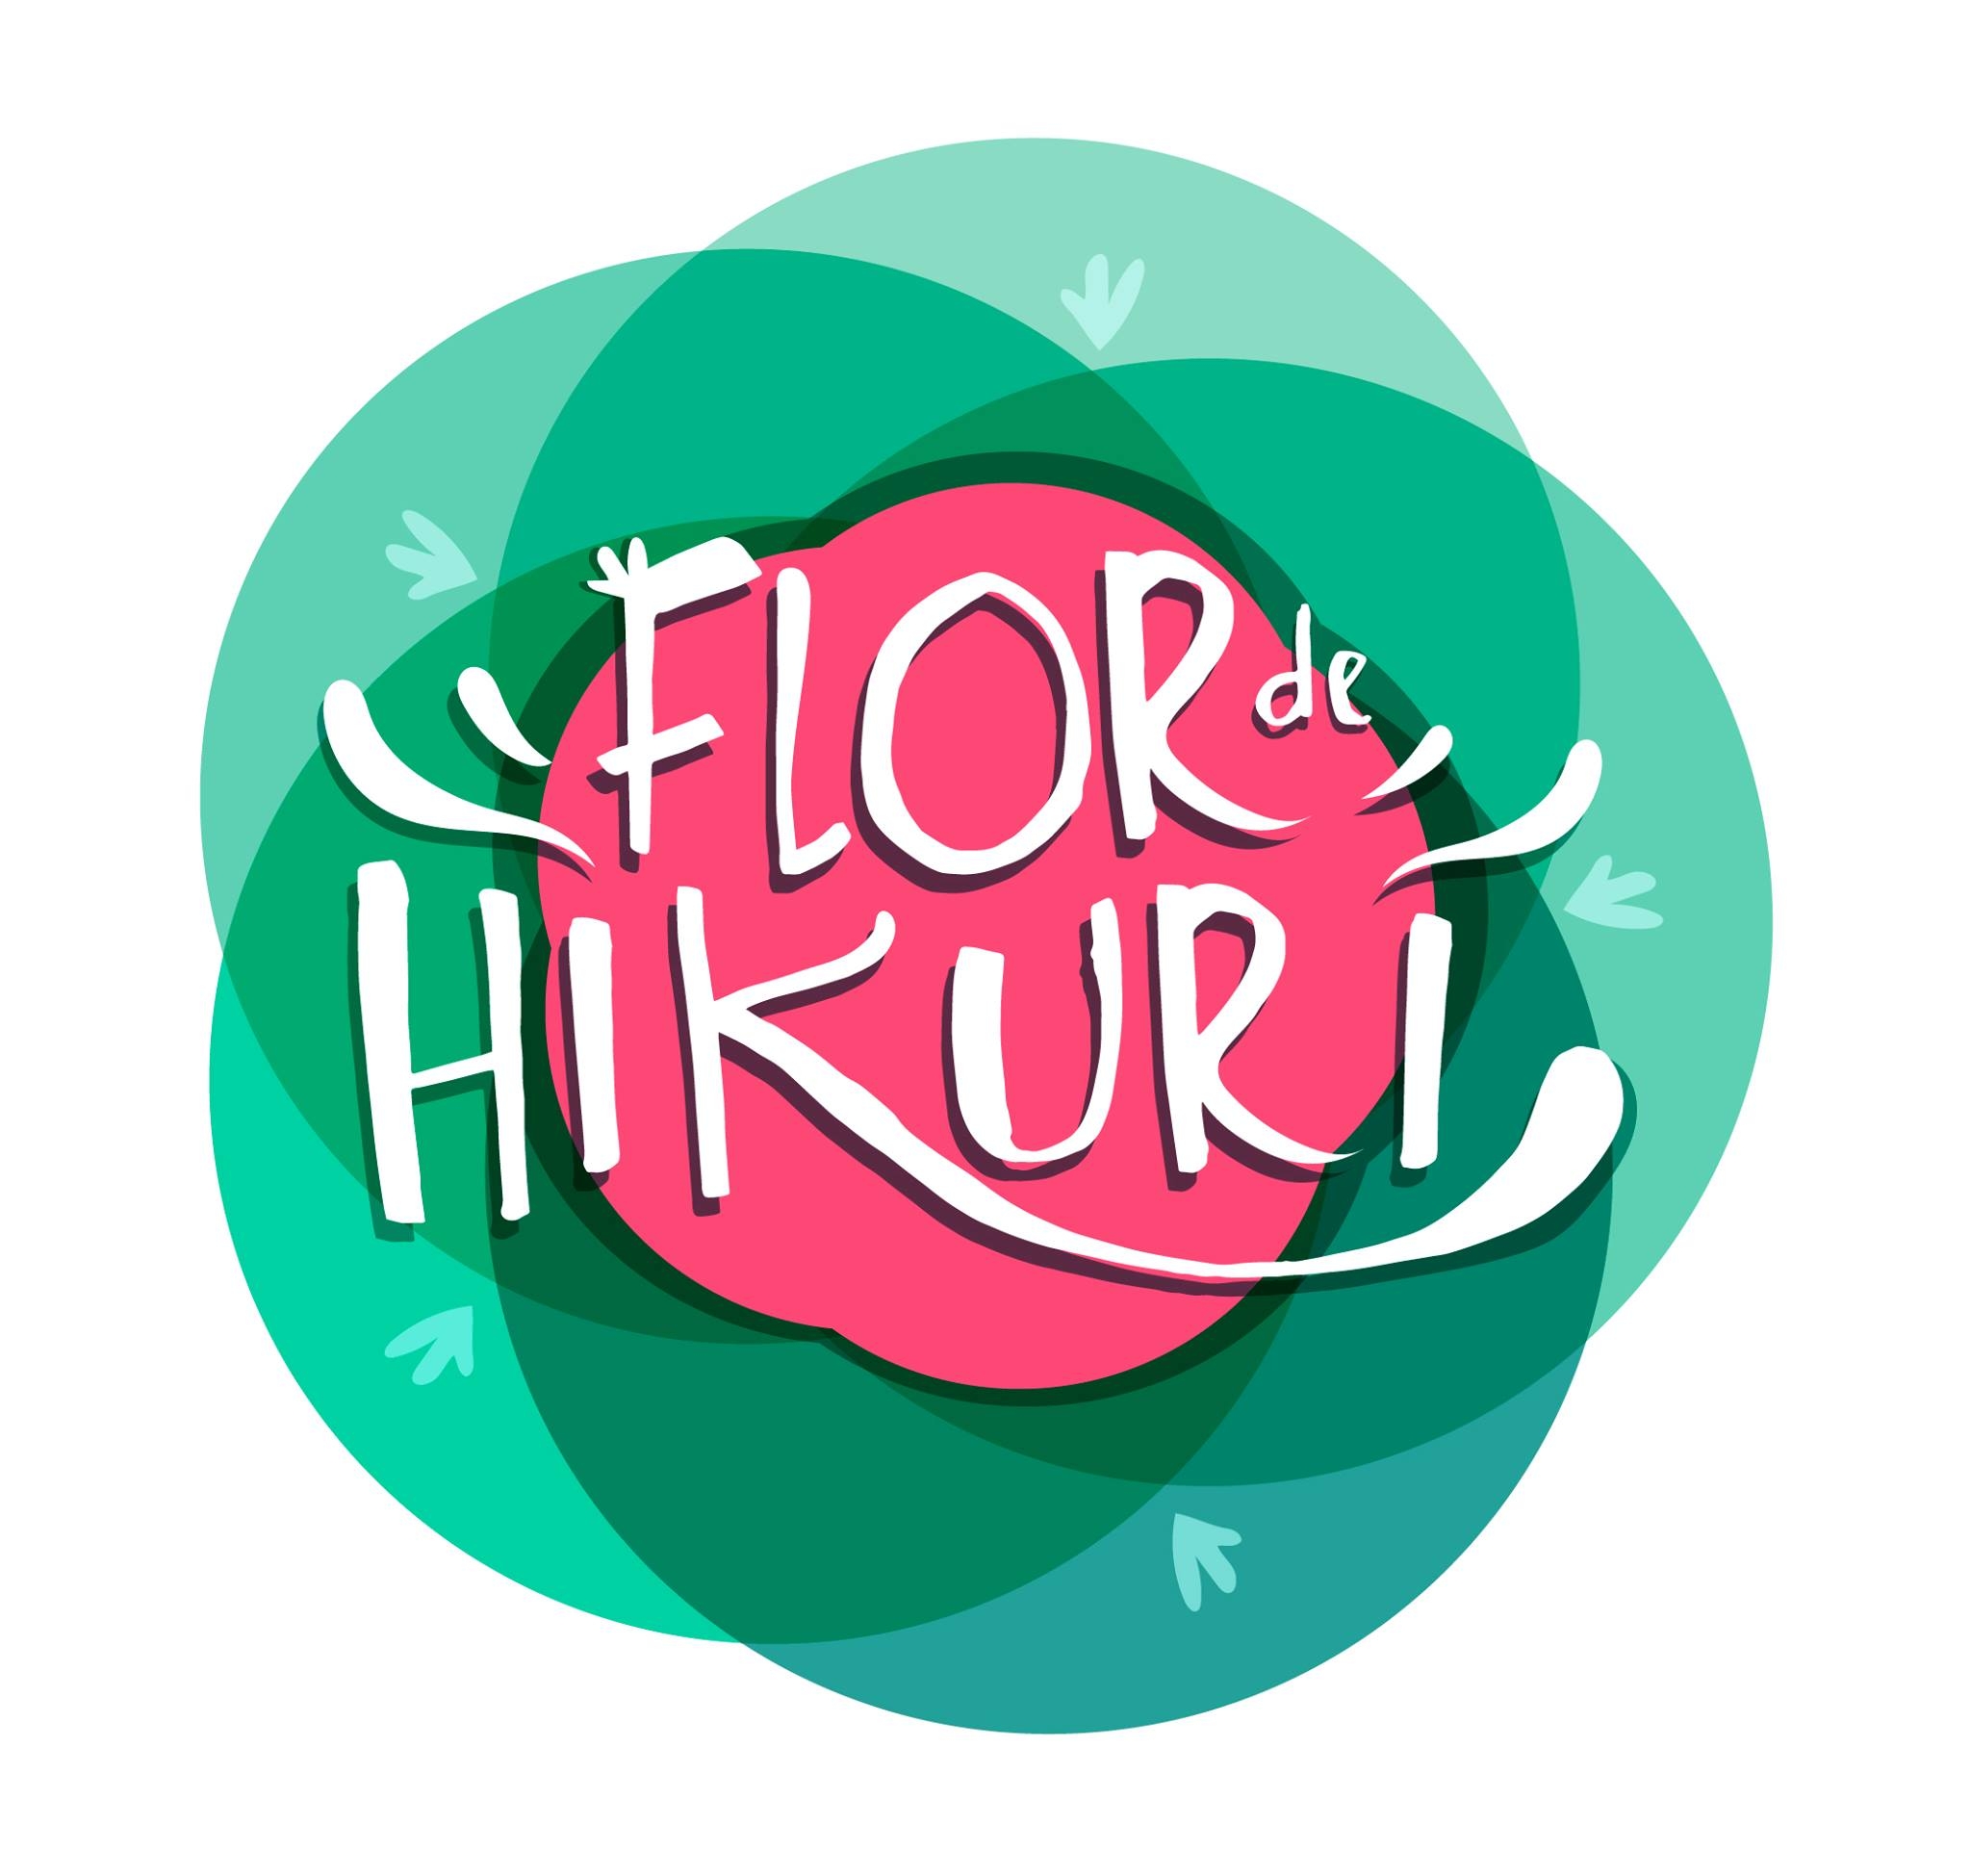 Flor de Hikuri